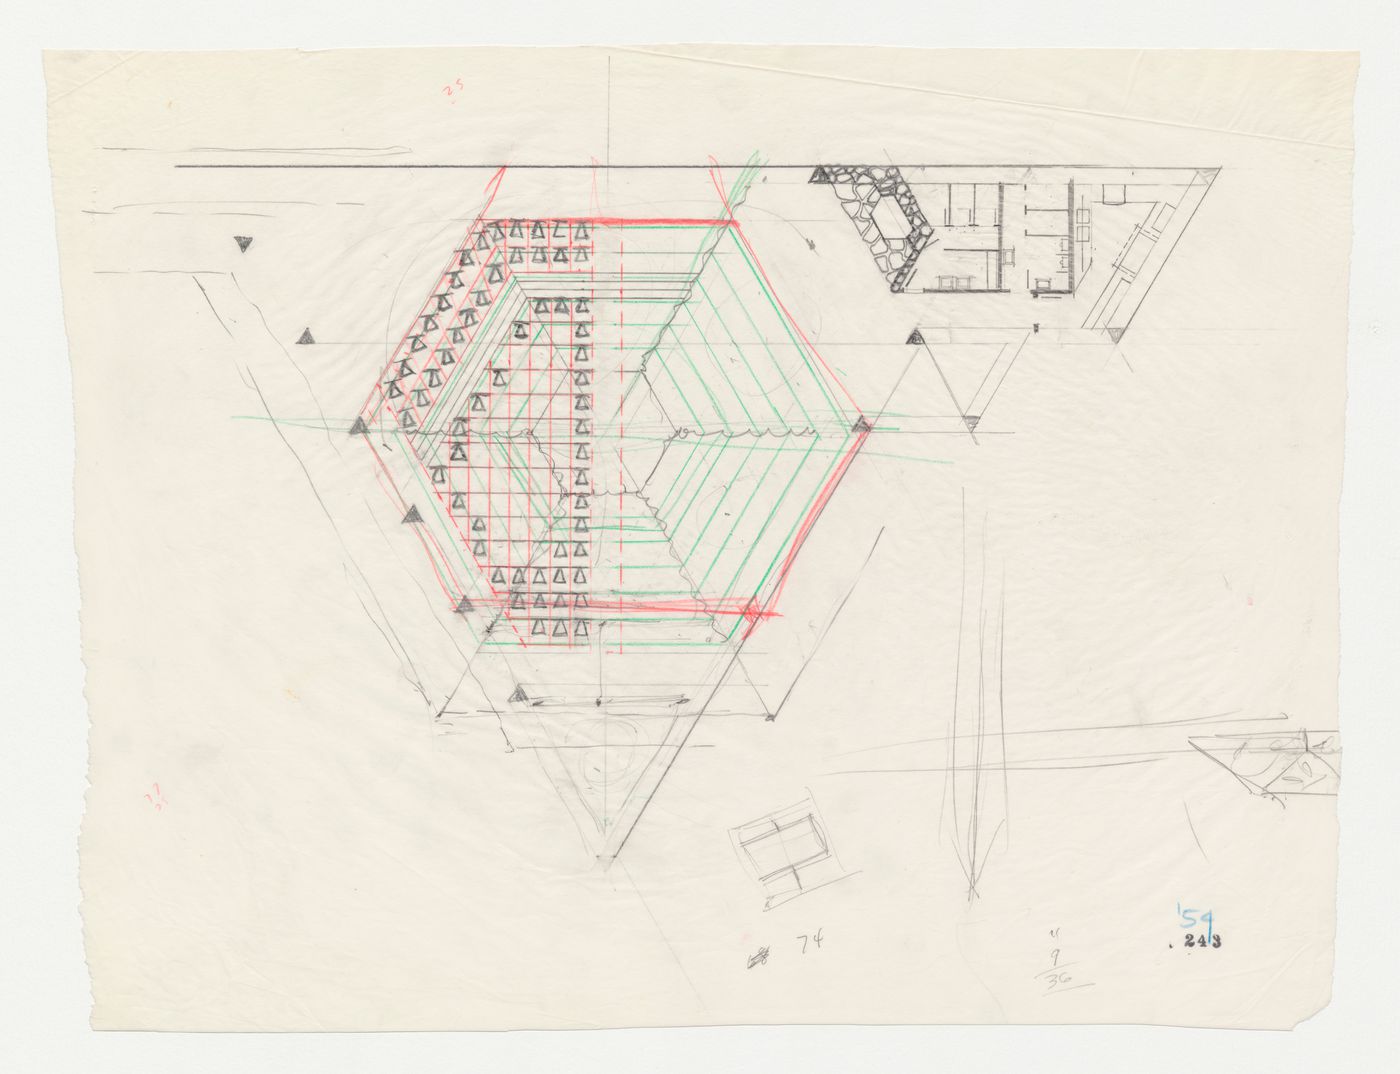 Wayfarers' Chapel, Palos Verdes, California: Plan and thumbnail sketches for the parish house indicating seating arrangements